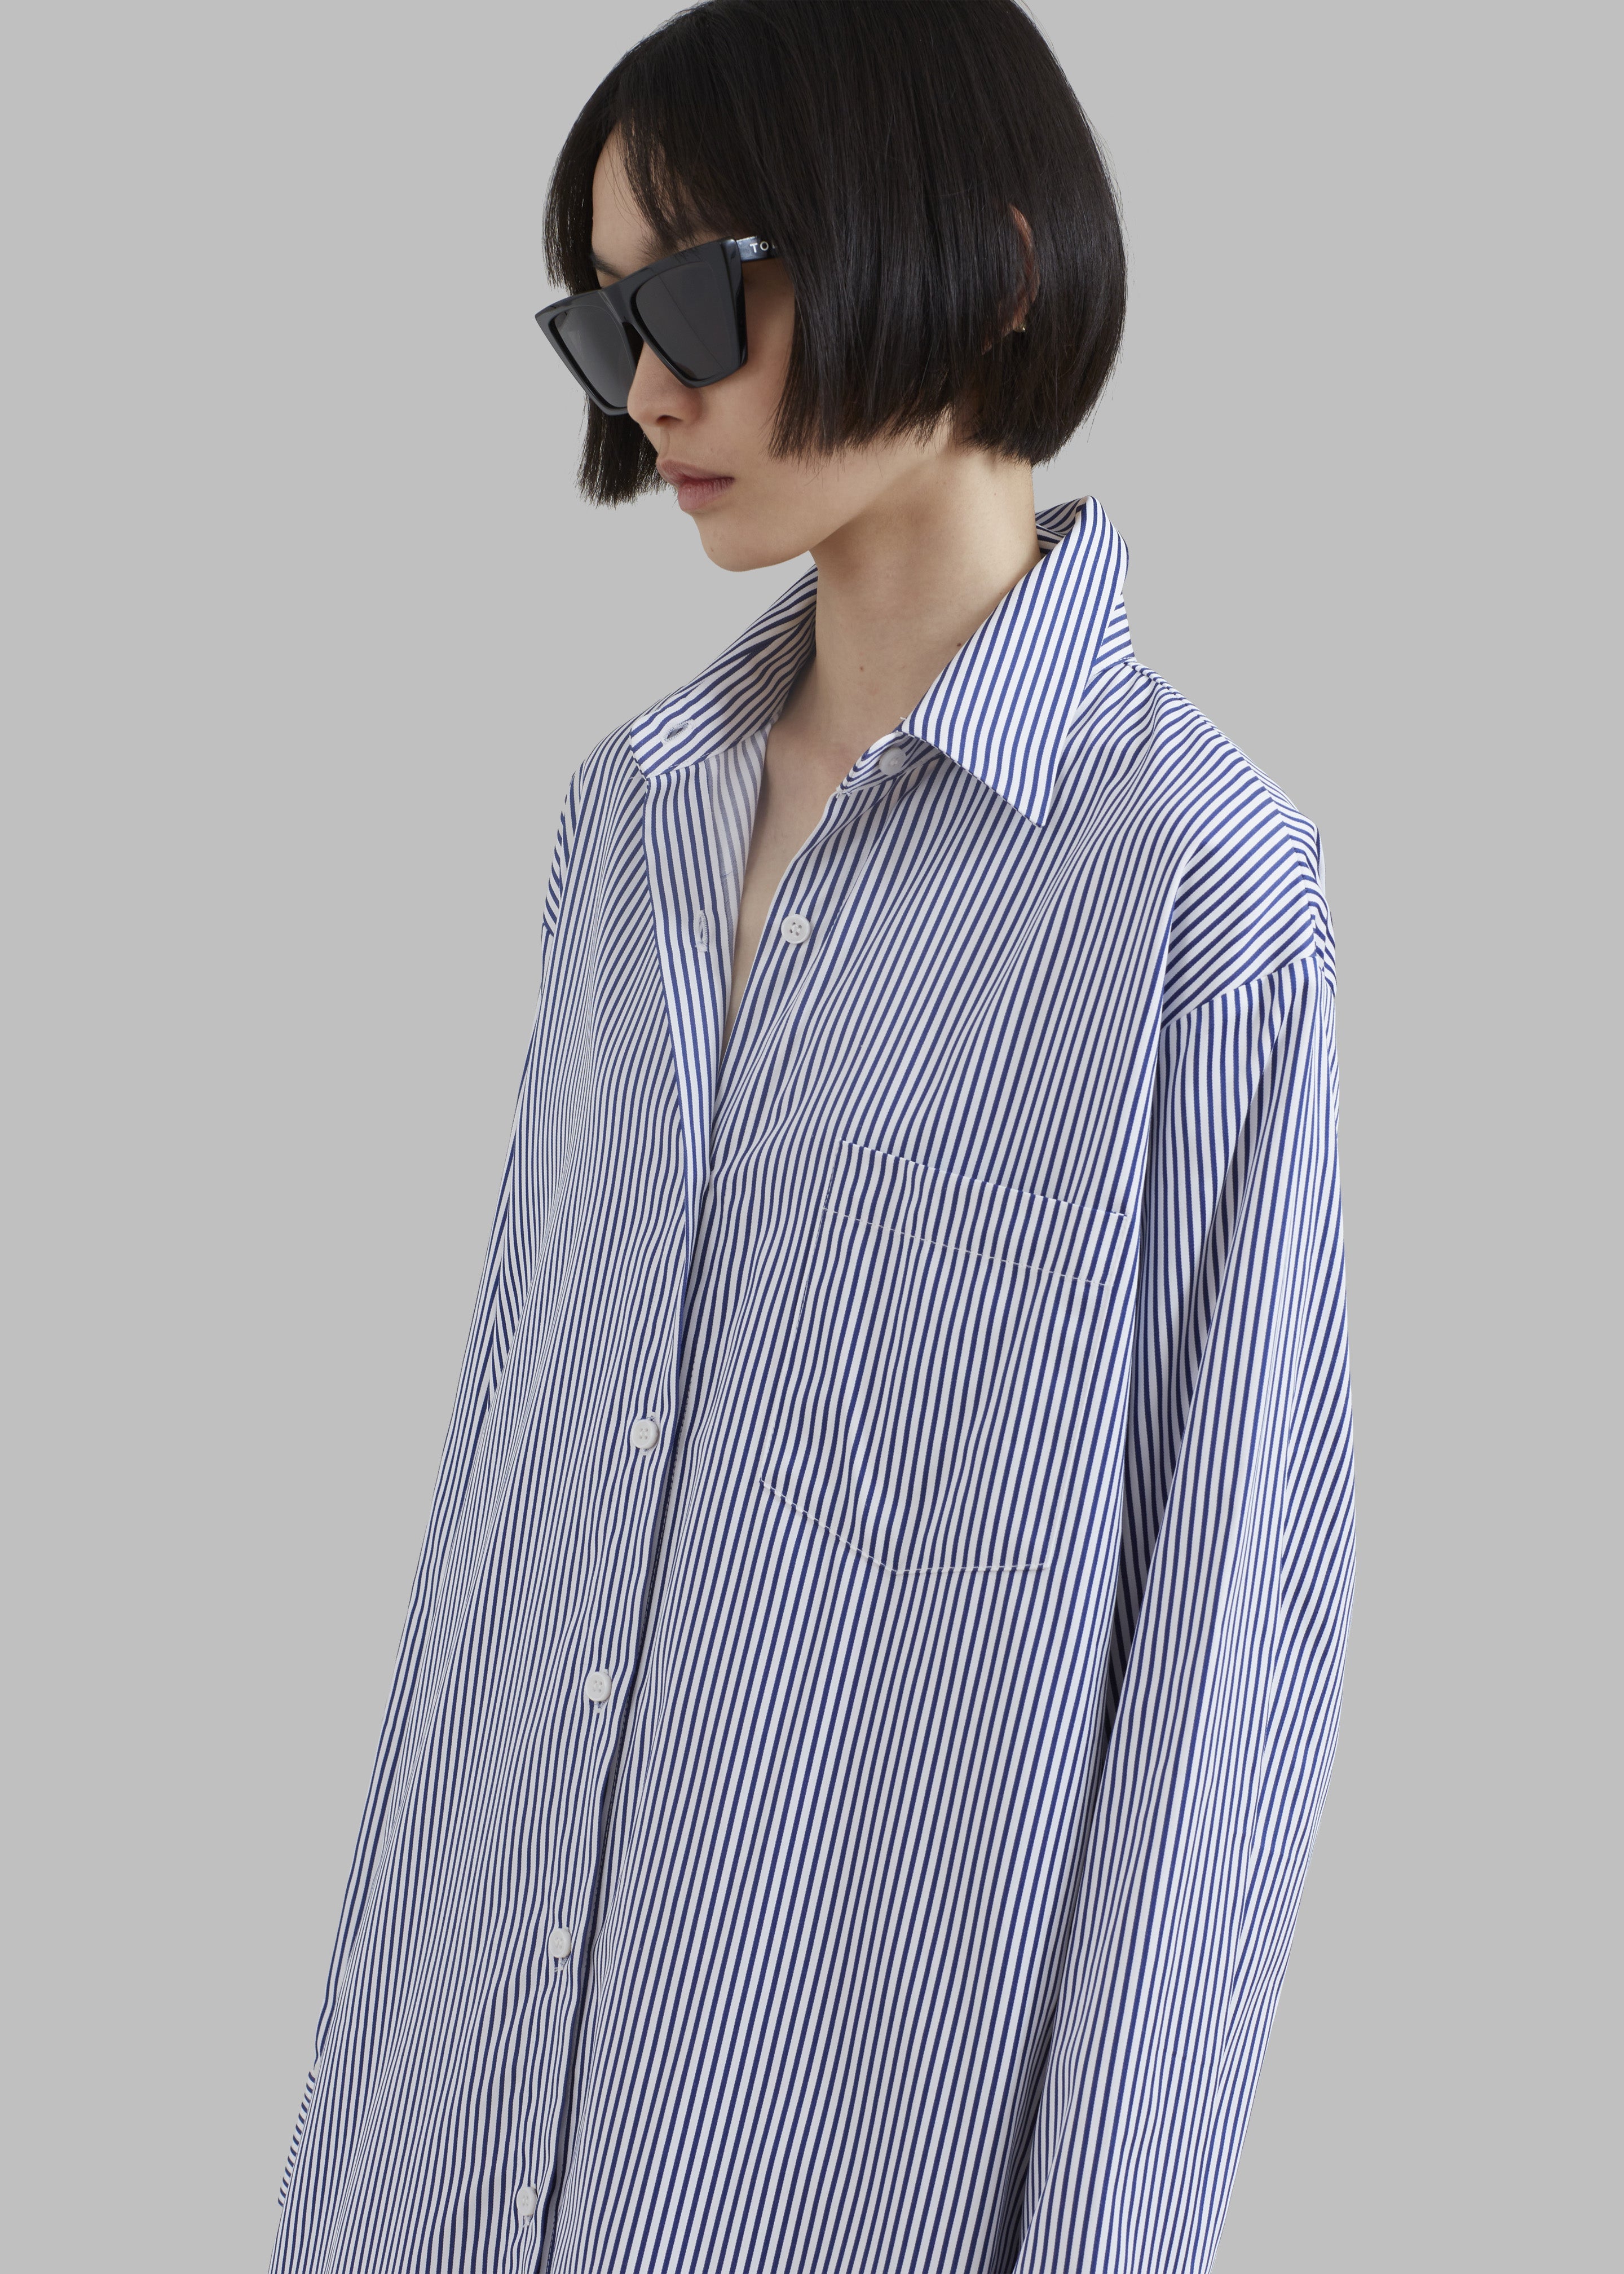 Cala Shirt Dress - Navy Stripe - 3